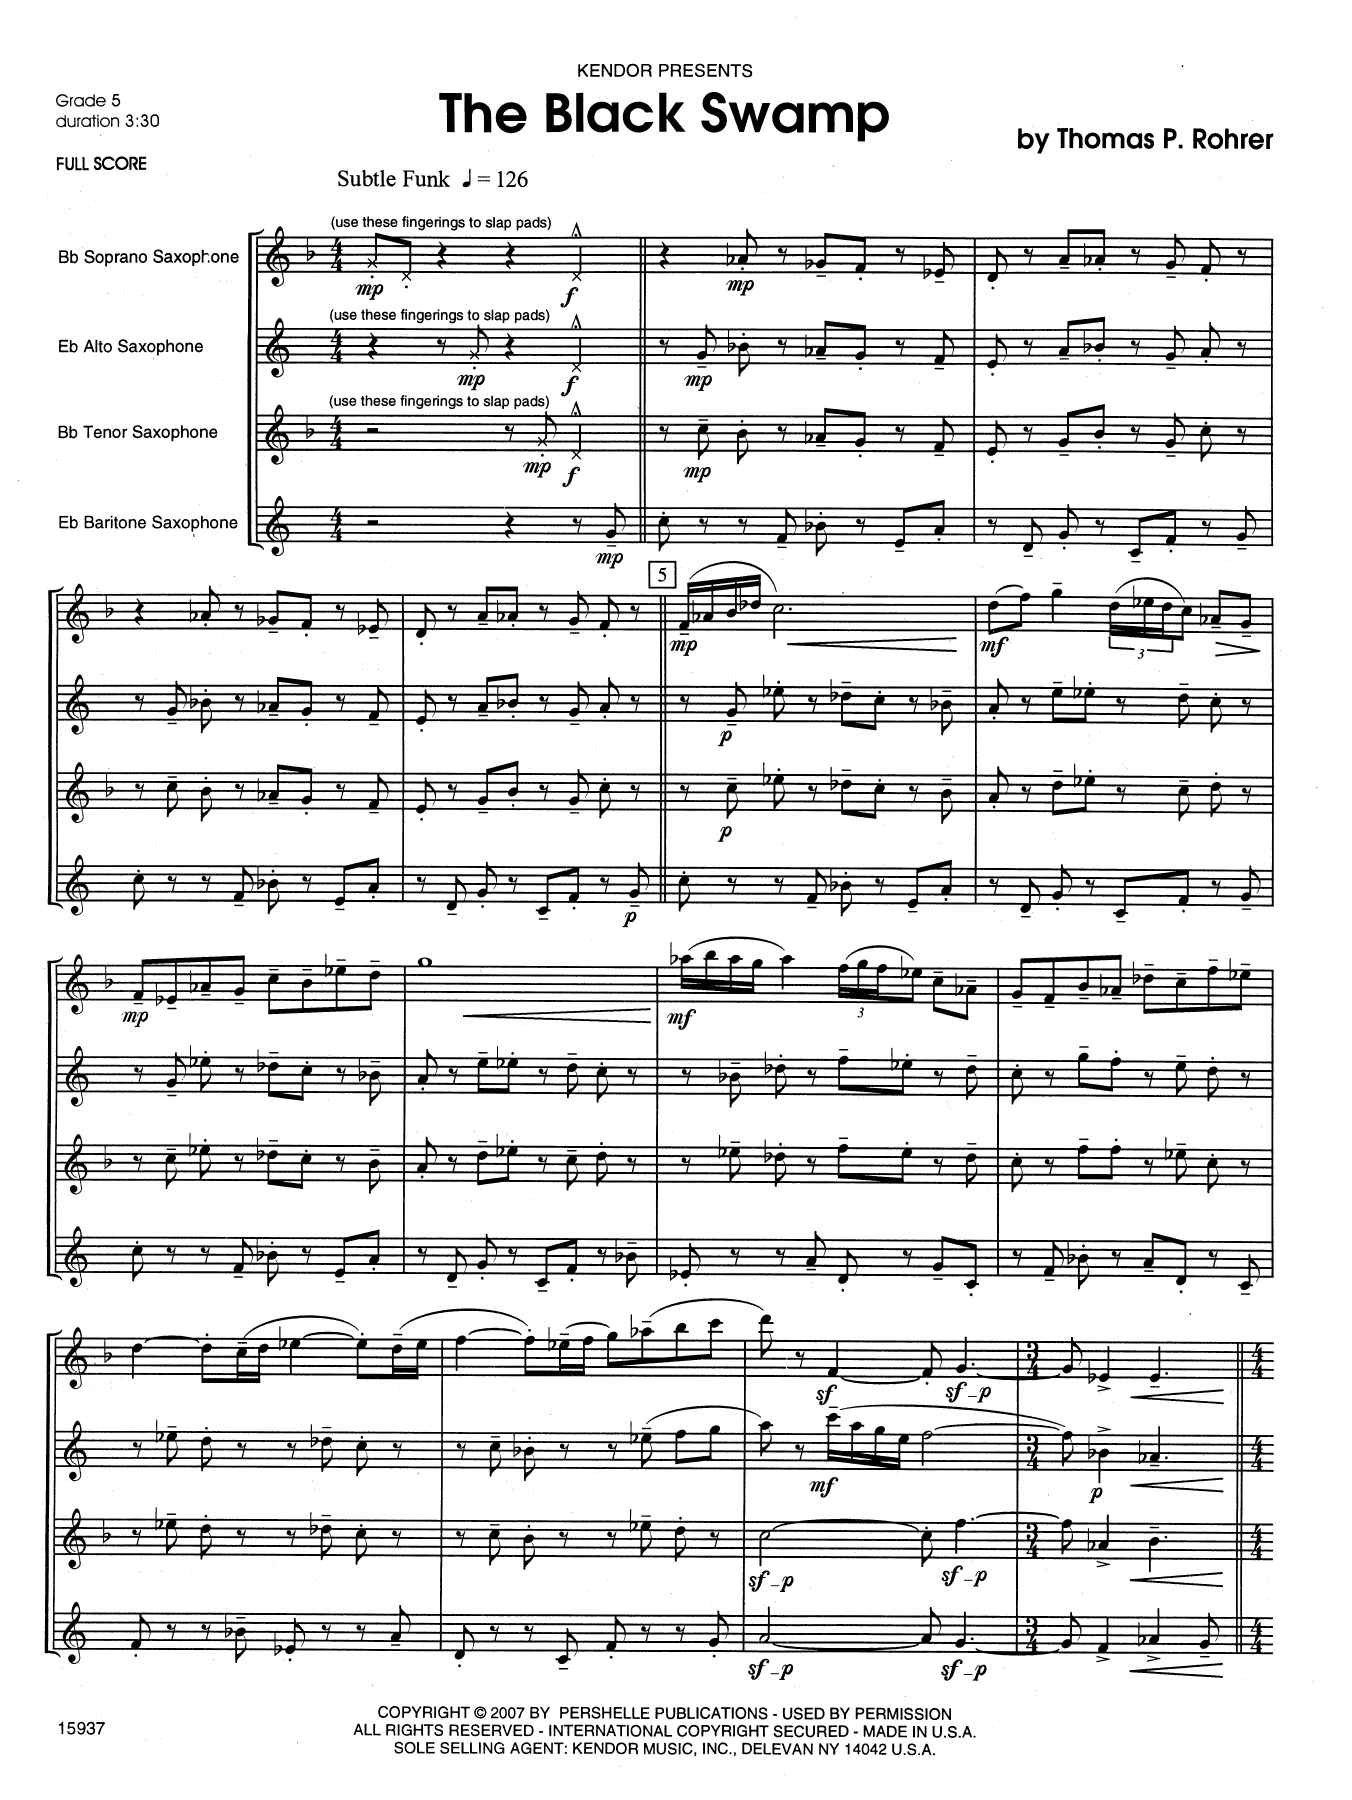 The Black Swamp - Full Score (Woodwind Ensemble) von Rohrer